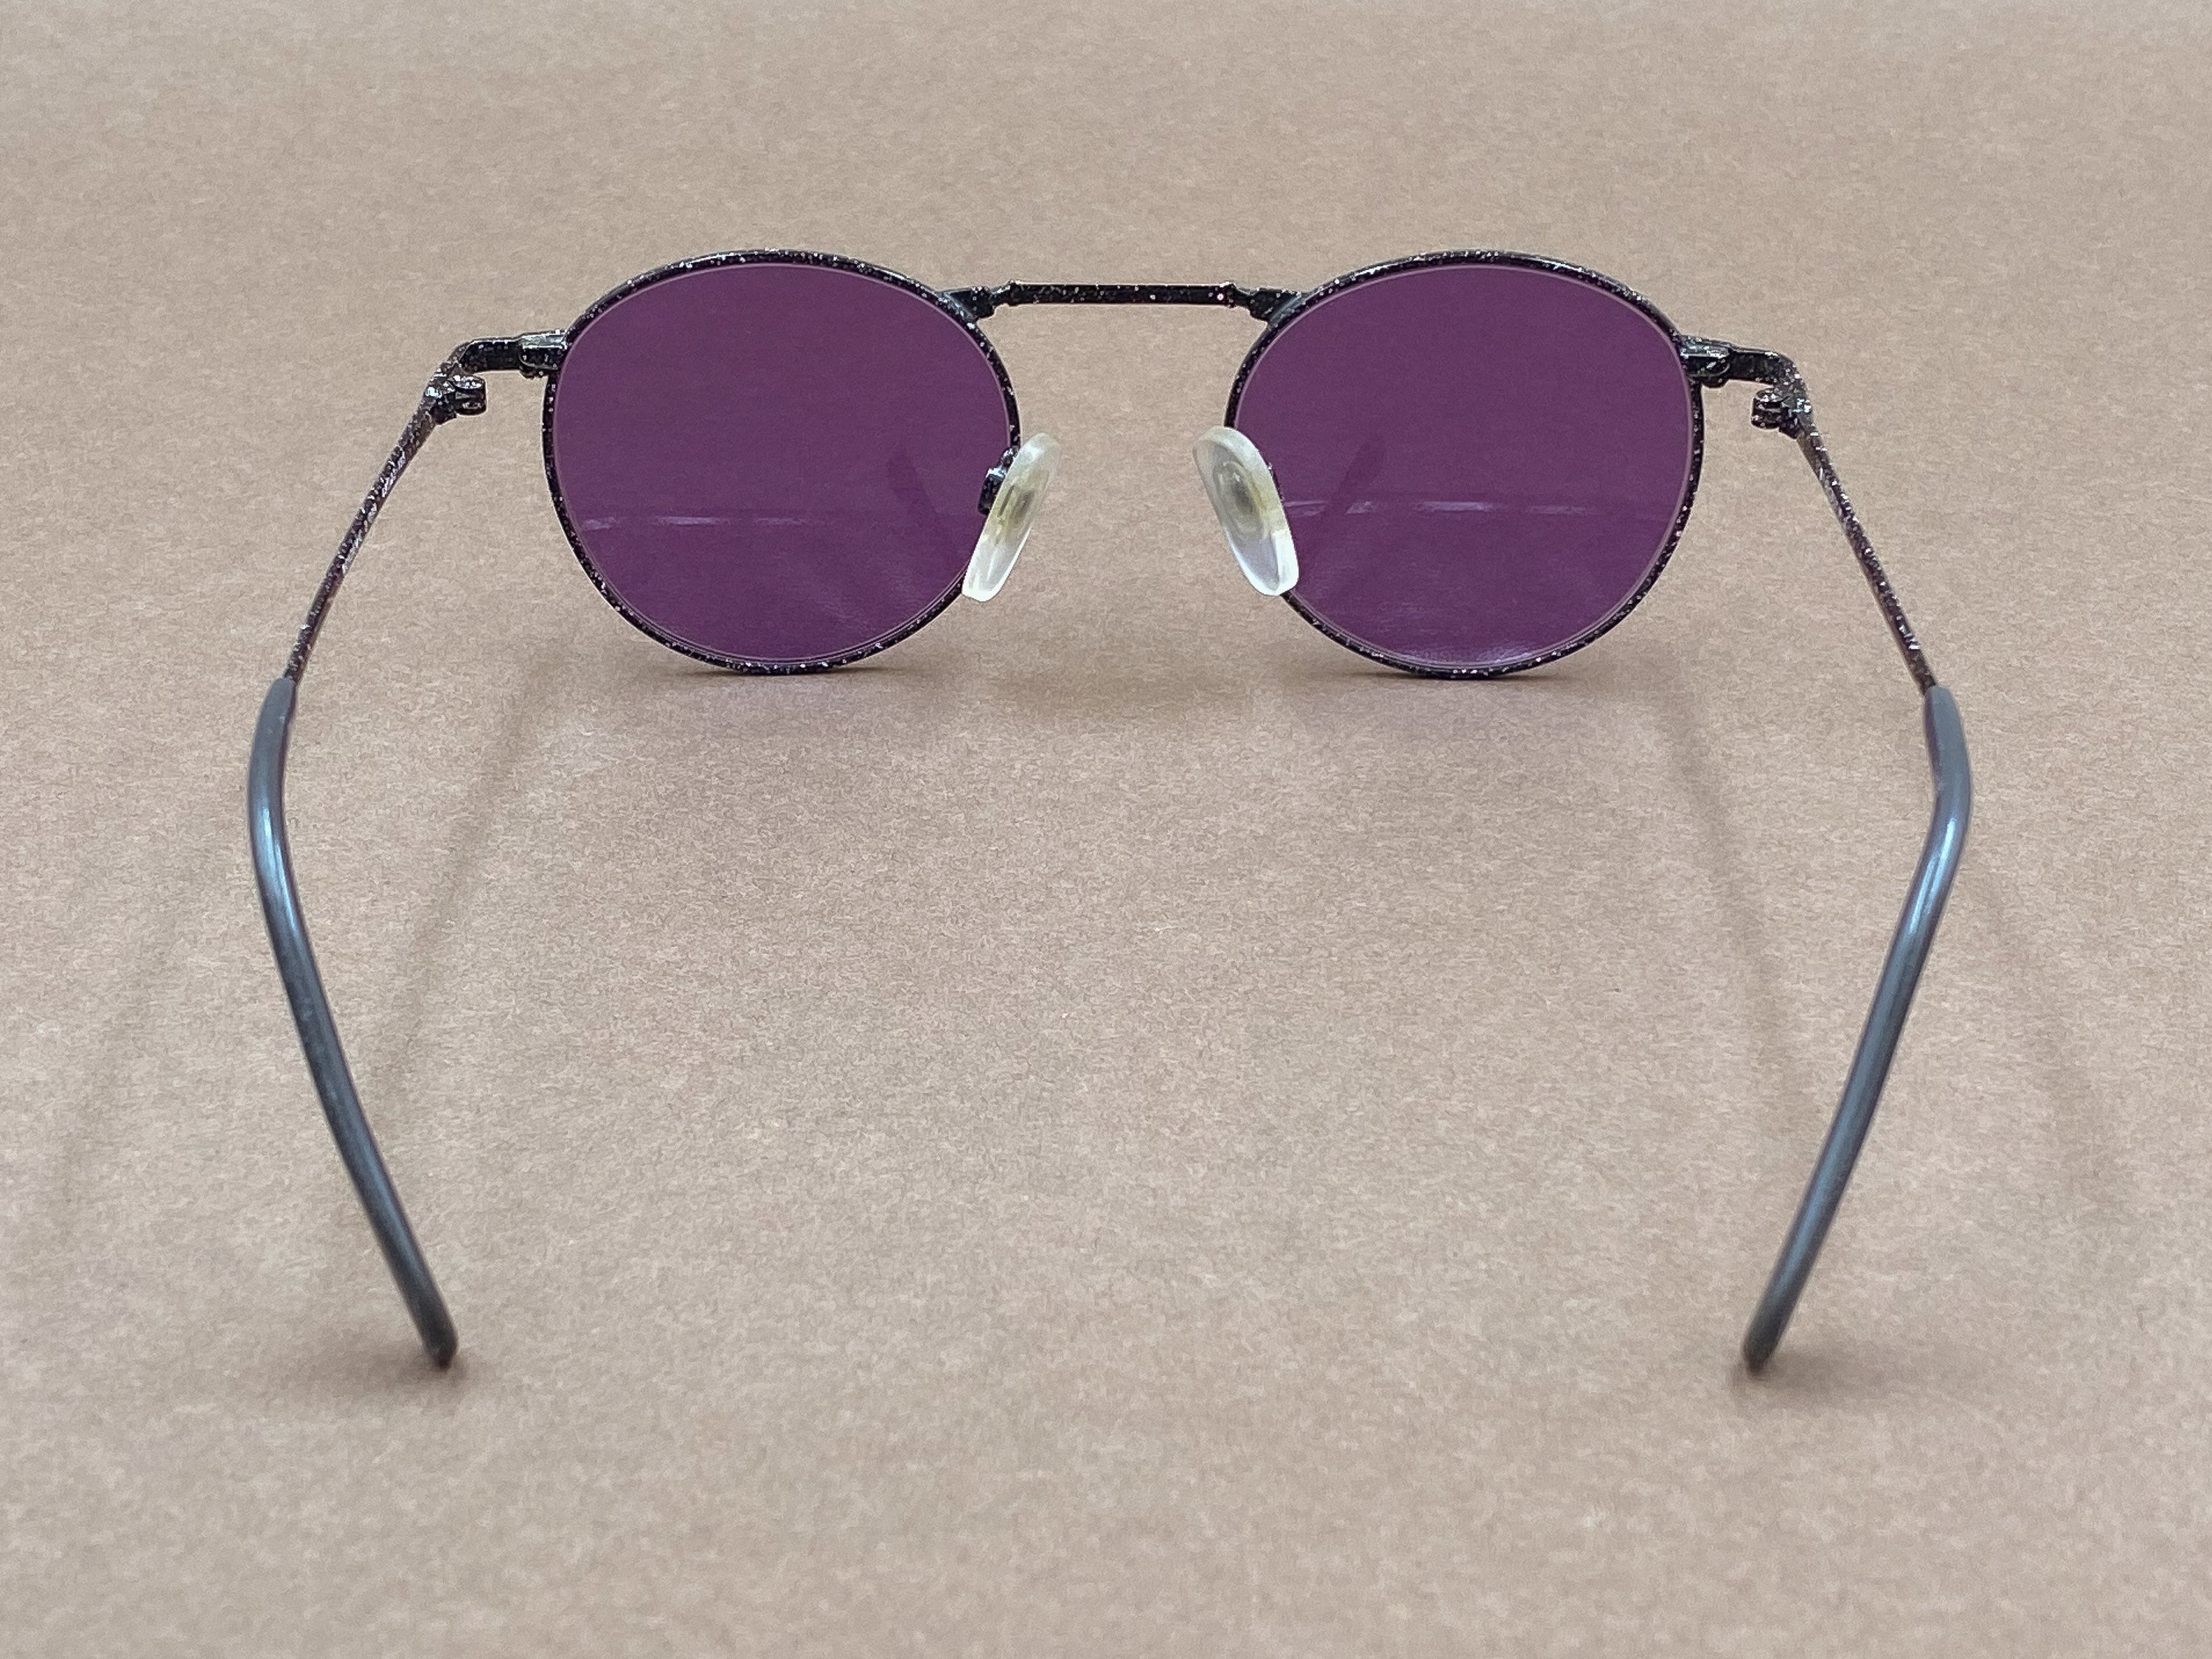 Neostyle Academic 2 sunglasses